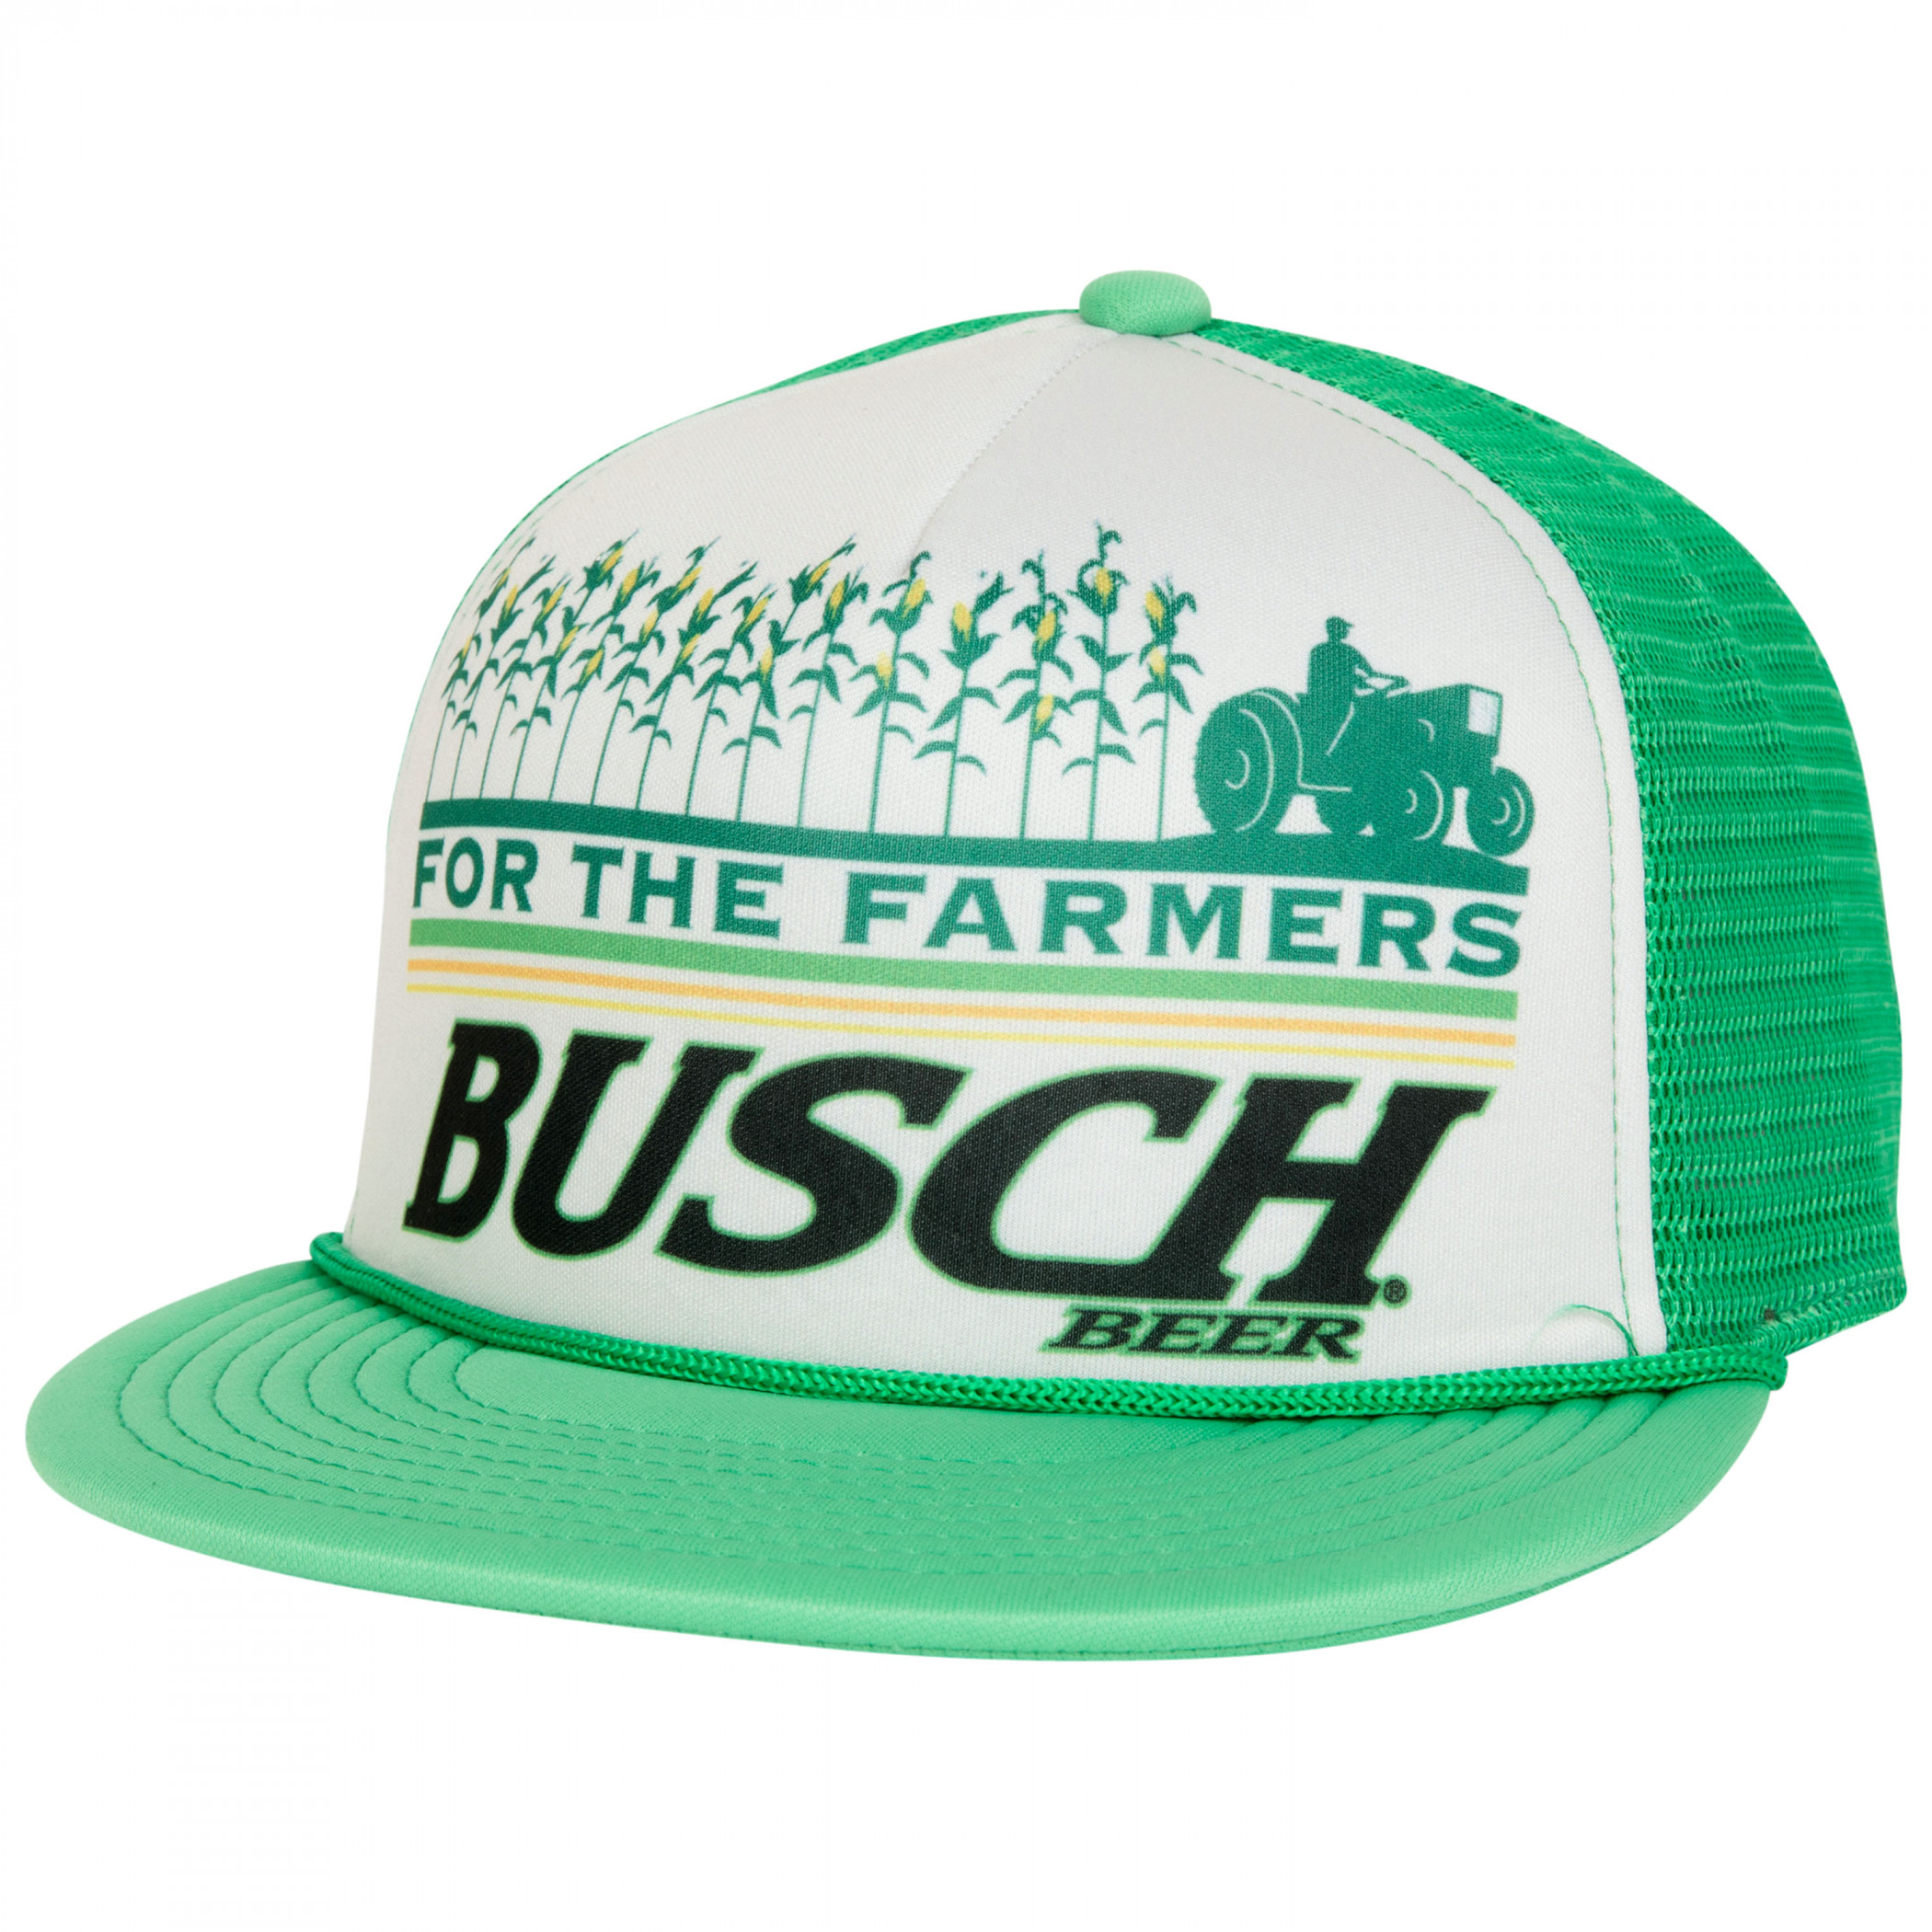 Busch Light Beer Hat 